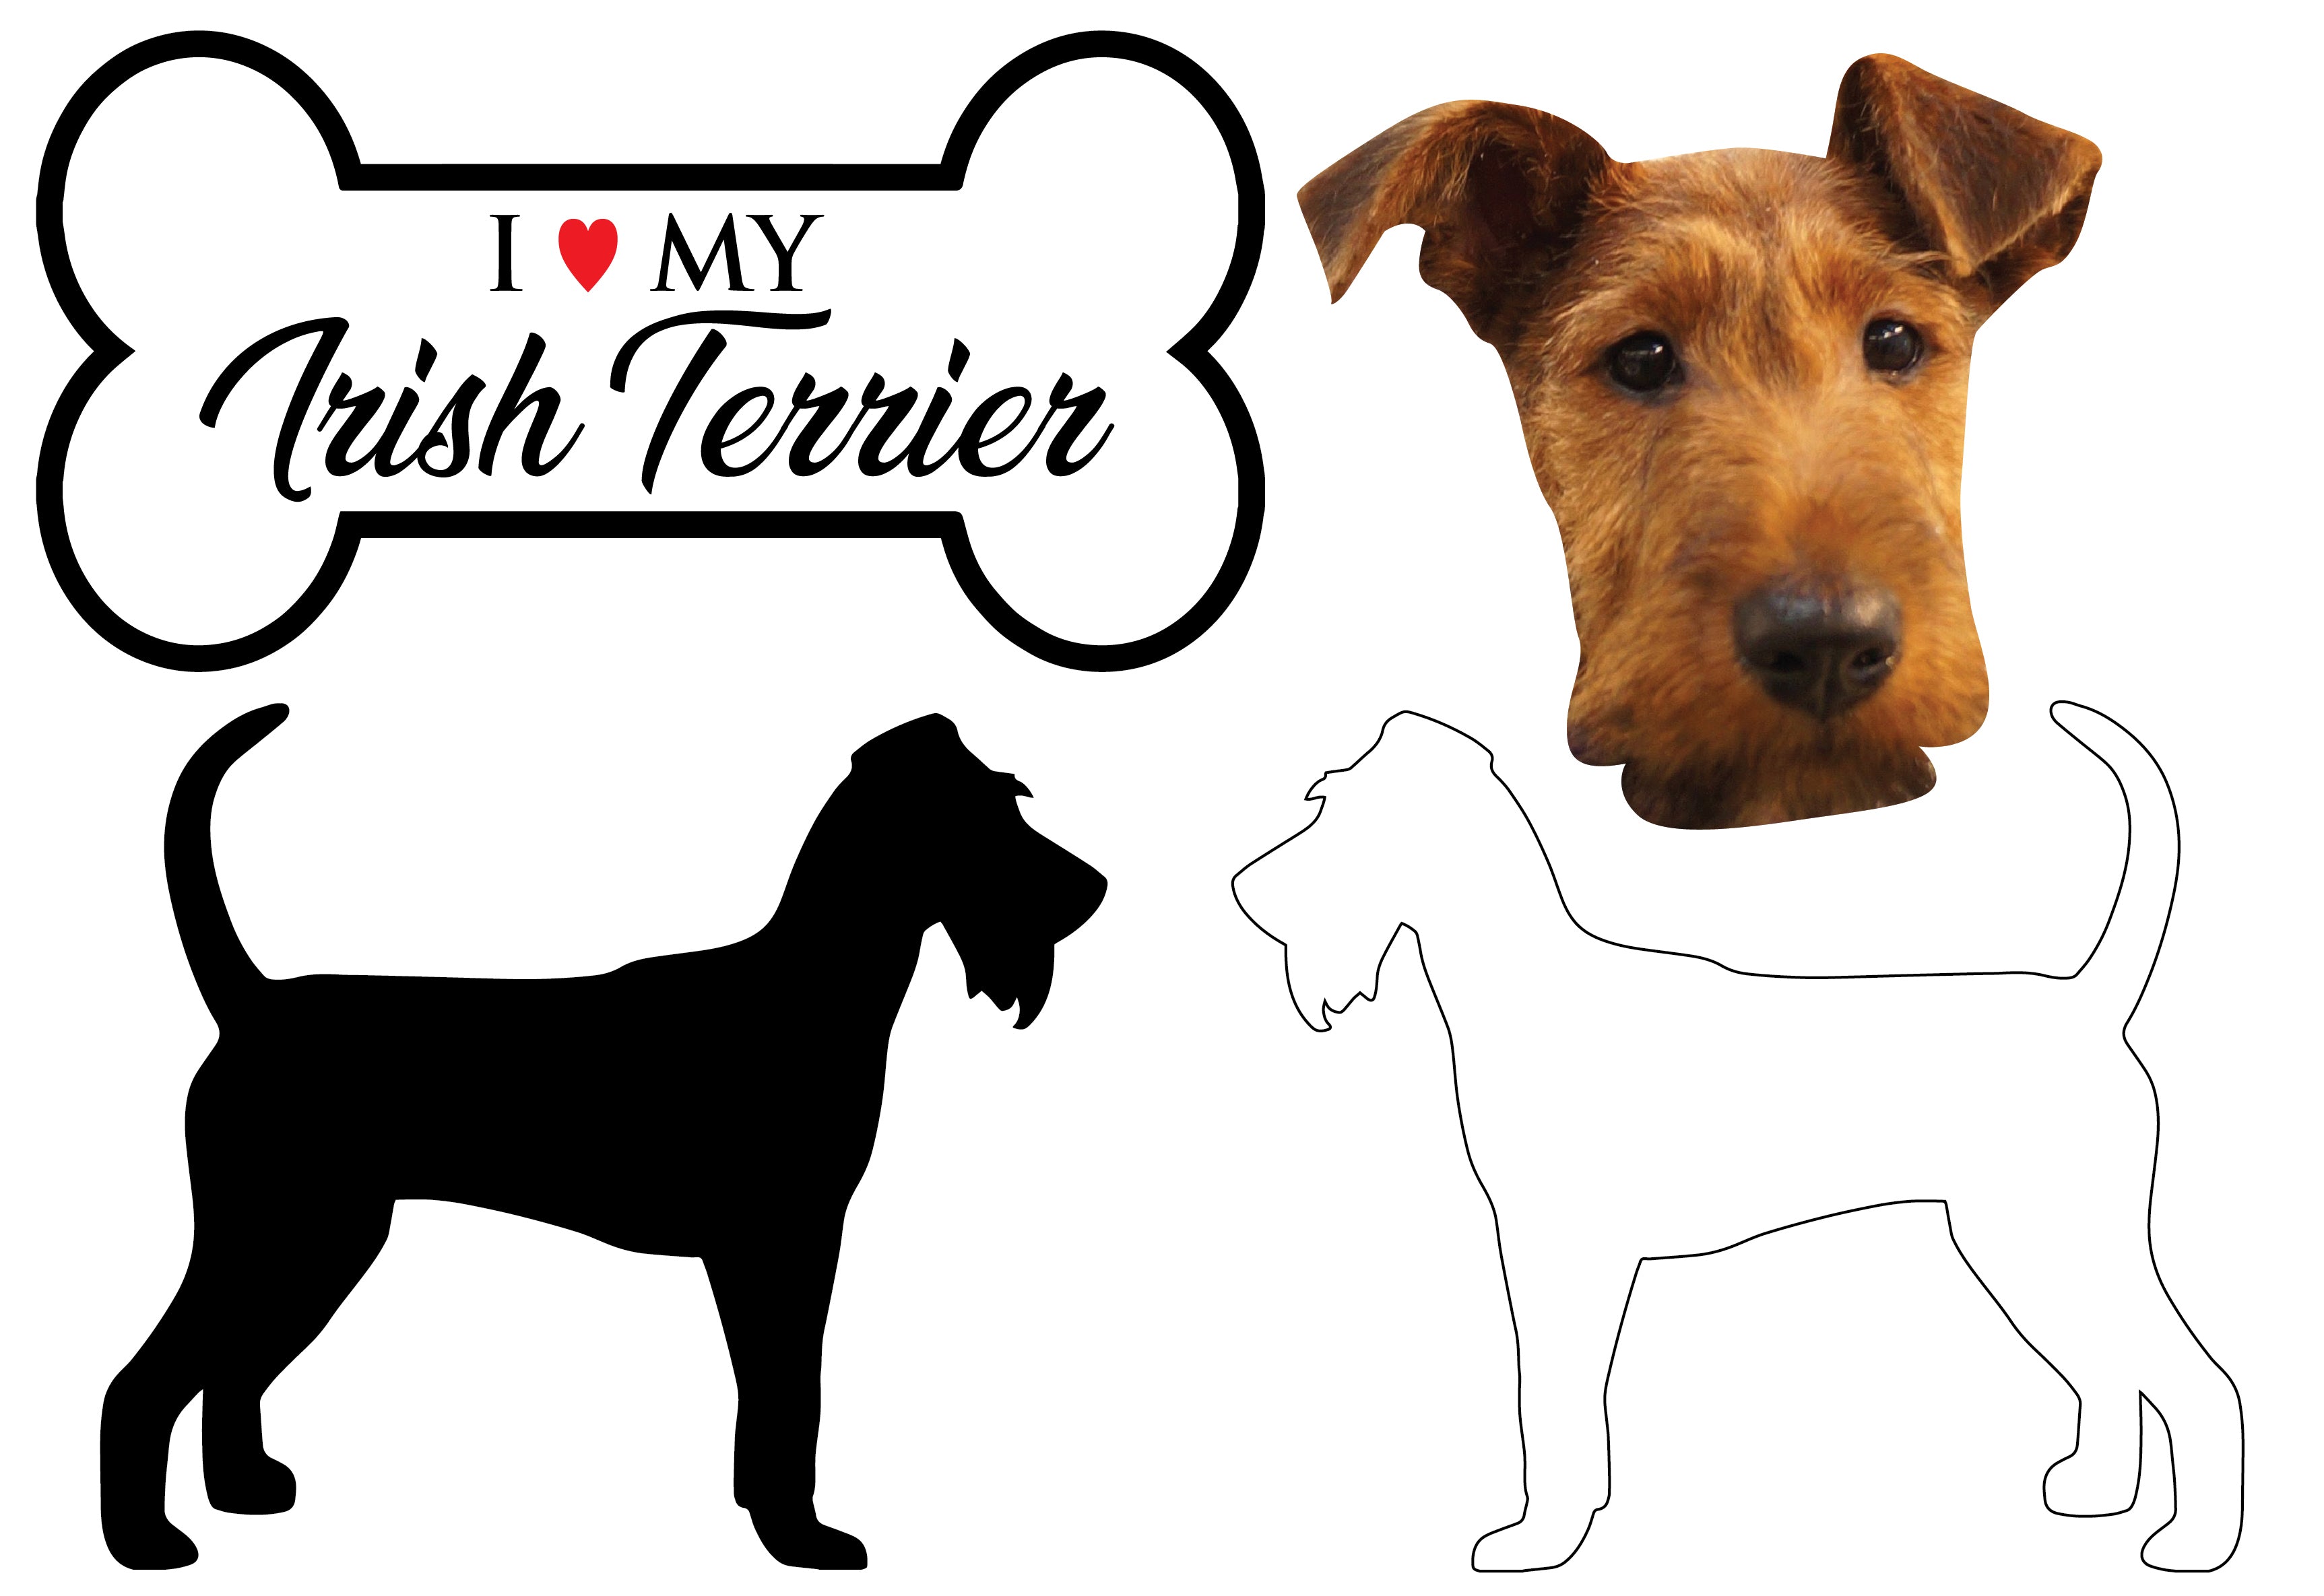 Irish Terrier - Dog Breed Decals (Set of 16) - Sizes in Description